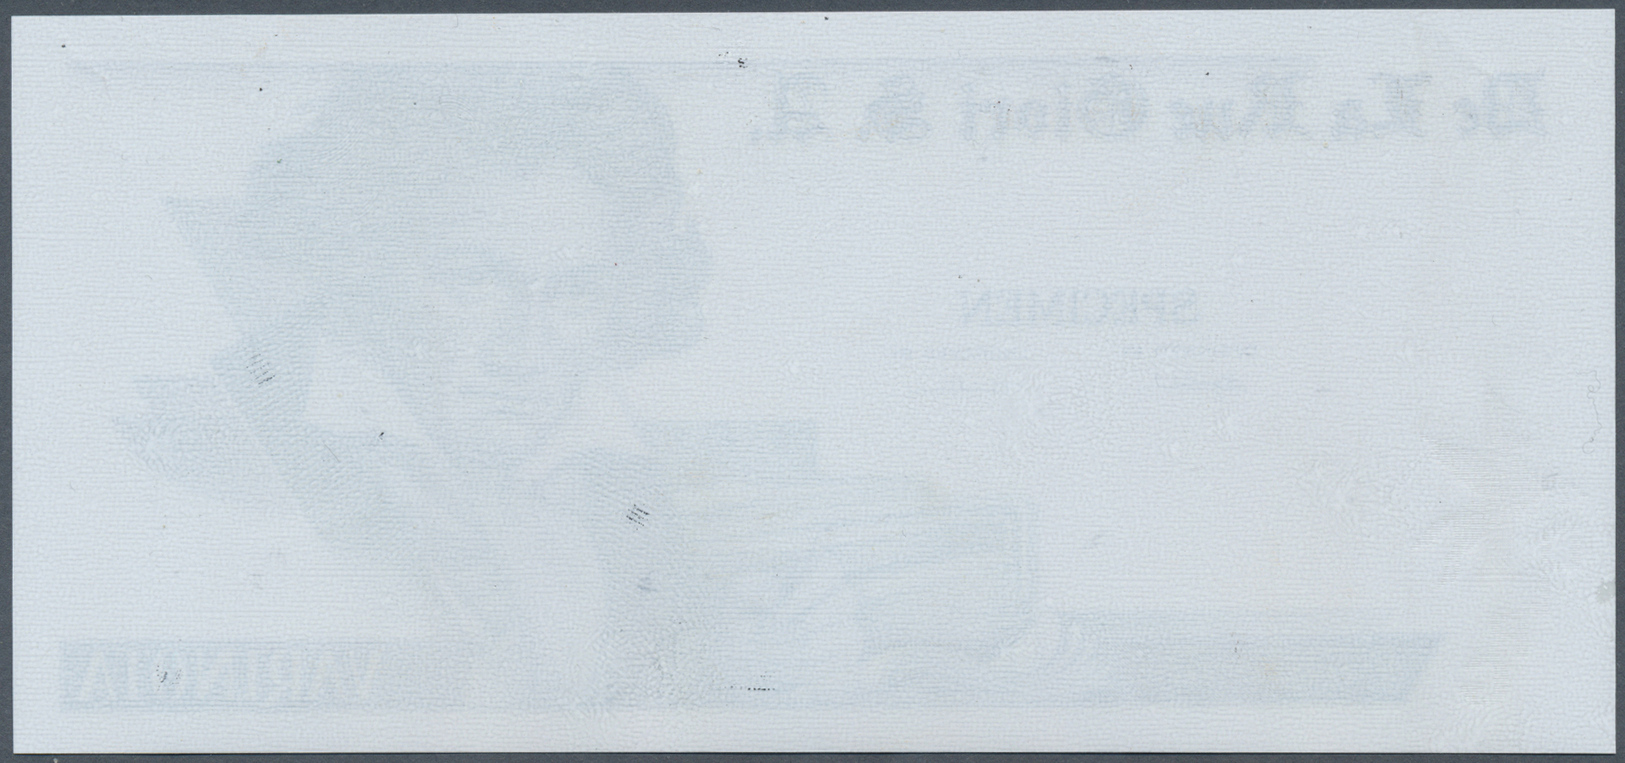 03535 Testbanknoten: Switzerland: Polymer Test Note Printed By DE LA RUE GIORI S.A., Intaglio With Portrait Beethoven, U - Specimen